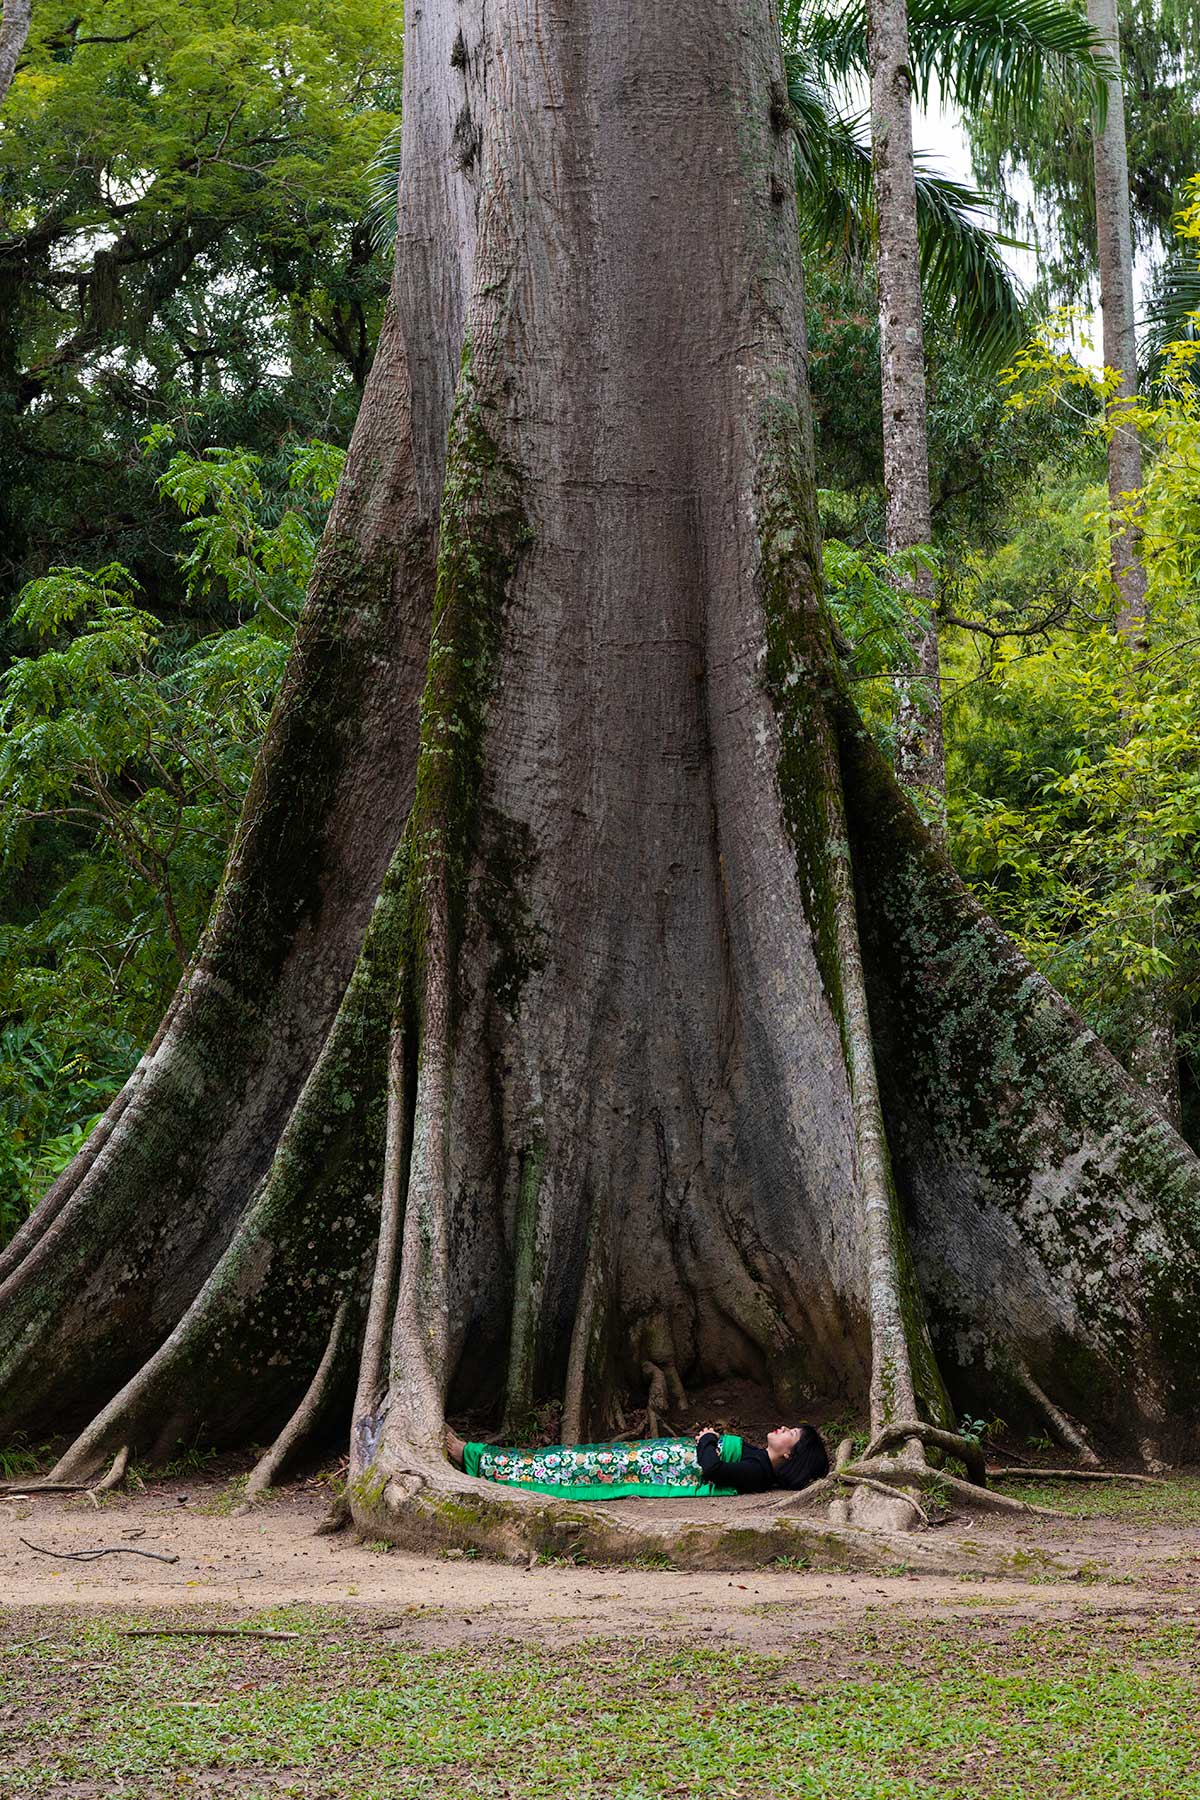 Chun Hua Catherine Dong is hugged by a big tree in Rio de Janeiro